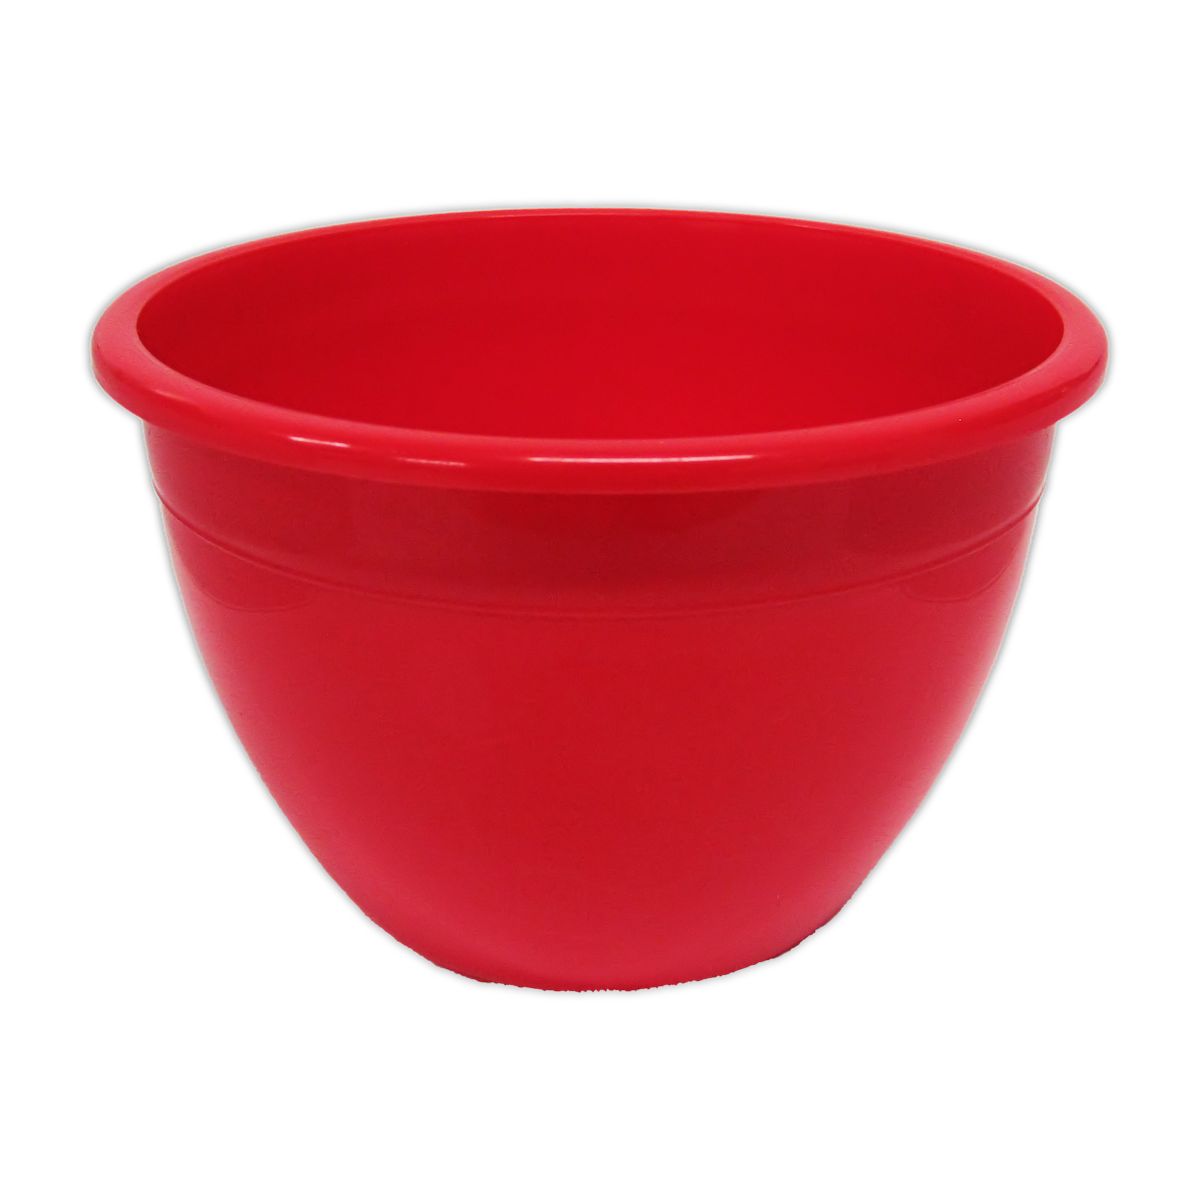 PUDB1225 - 1/2lb Red Pudding Bowl x 25